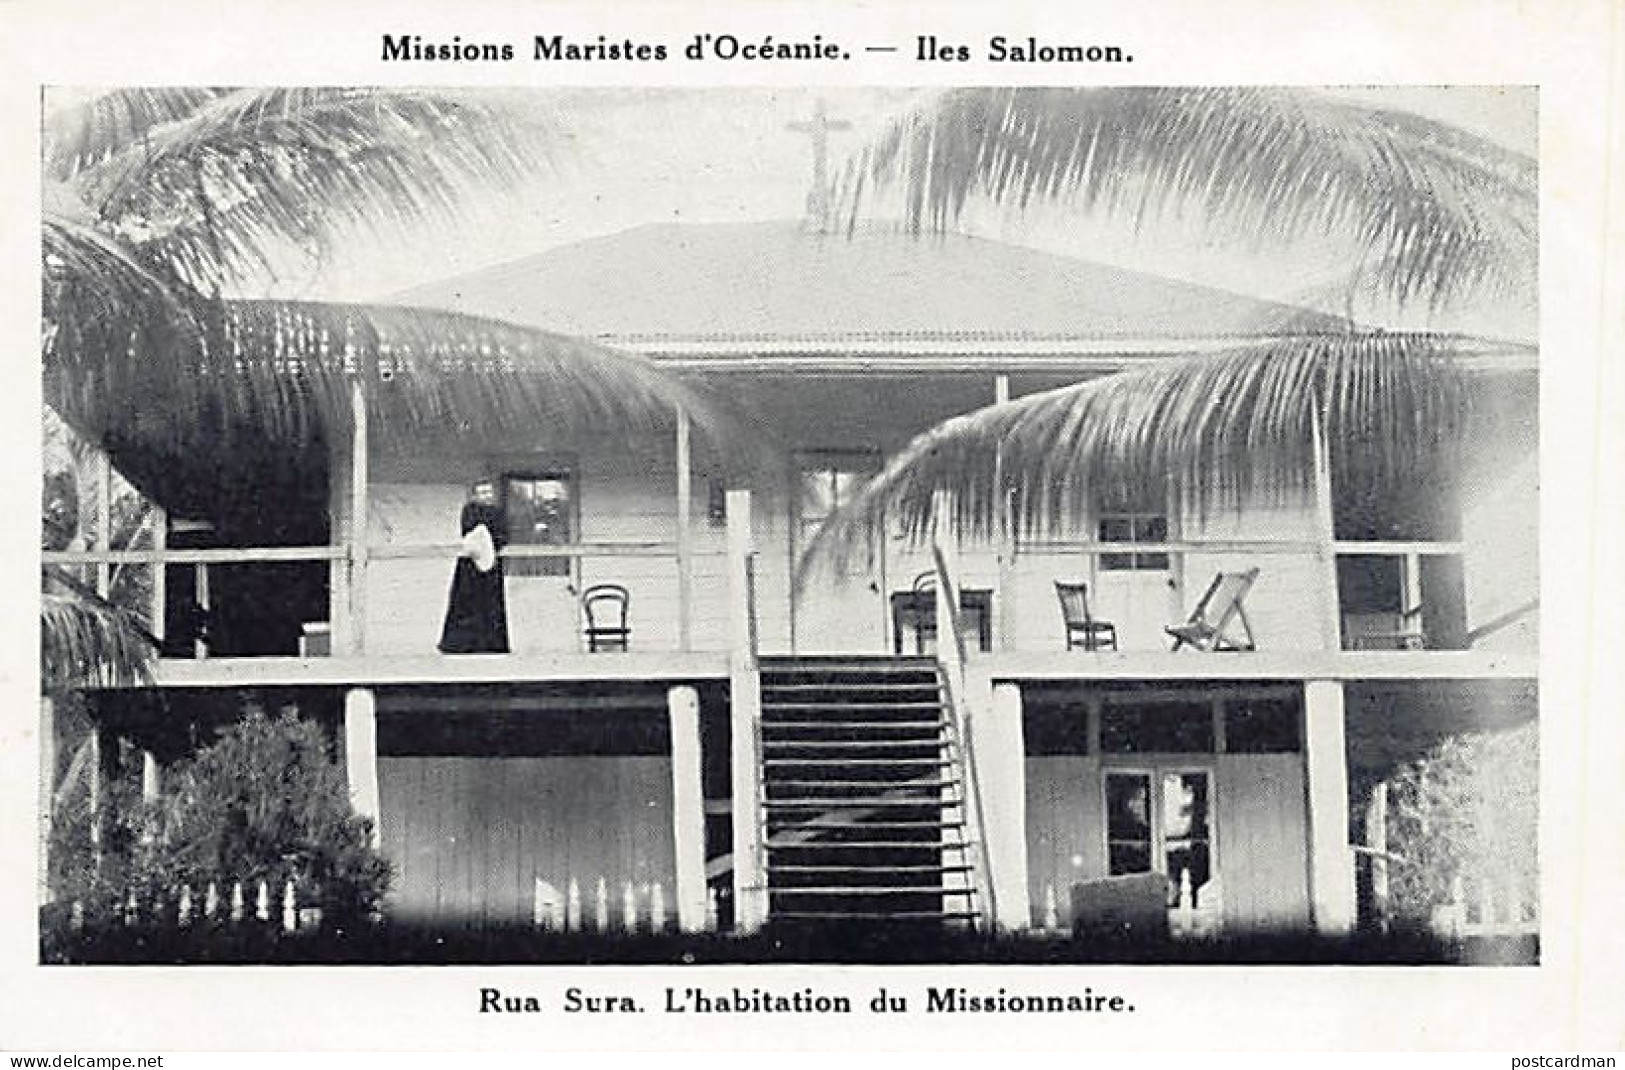 Solomon Islands - Rua Sura Island (off Aola Bay, Guadalcanal) - The Missionary's Dwelling - Publ. Missions Maristes D'Oc - Islas Salomon